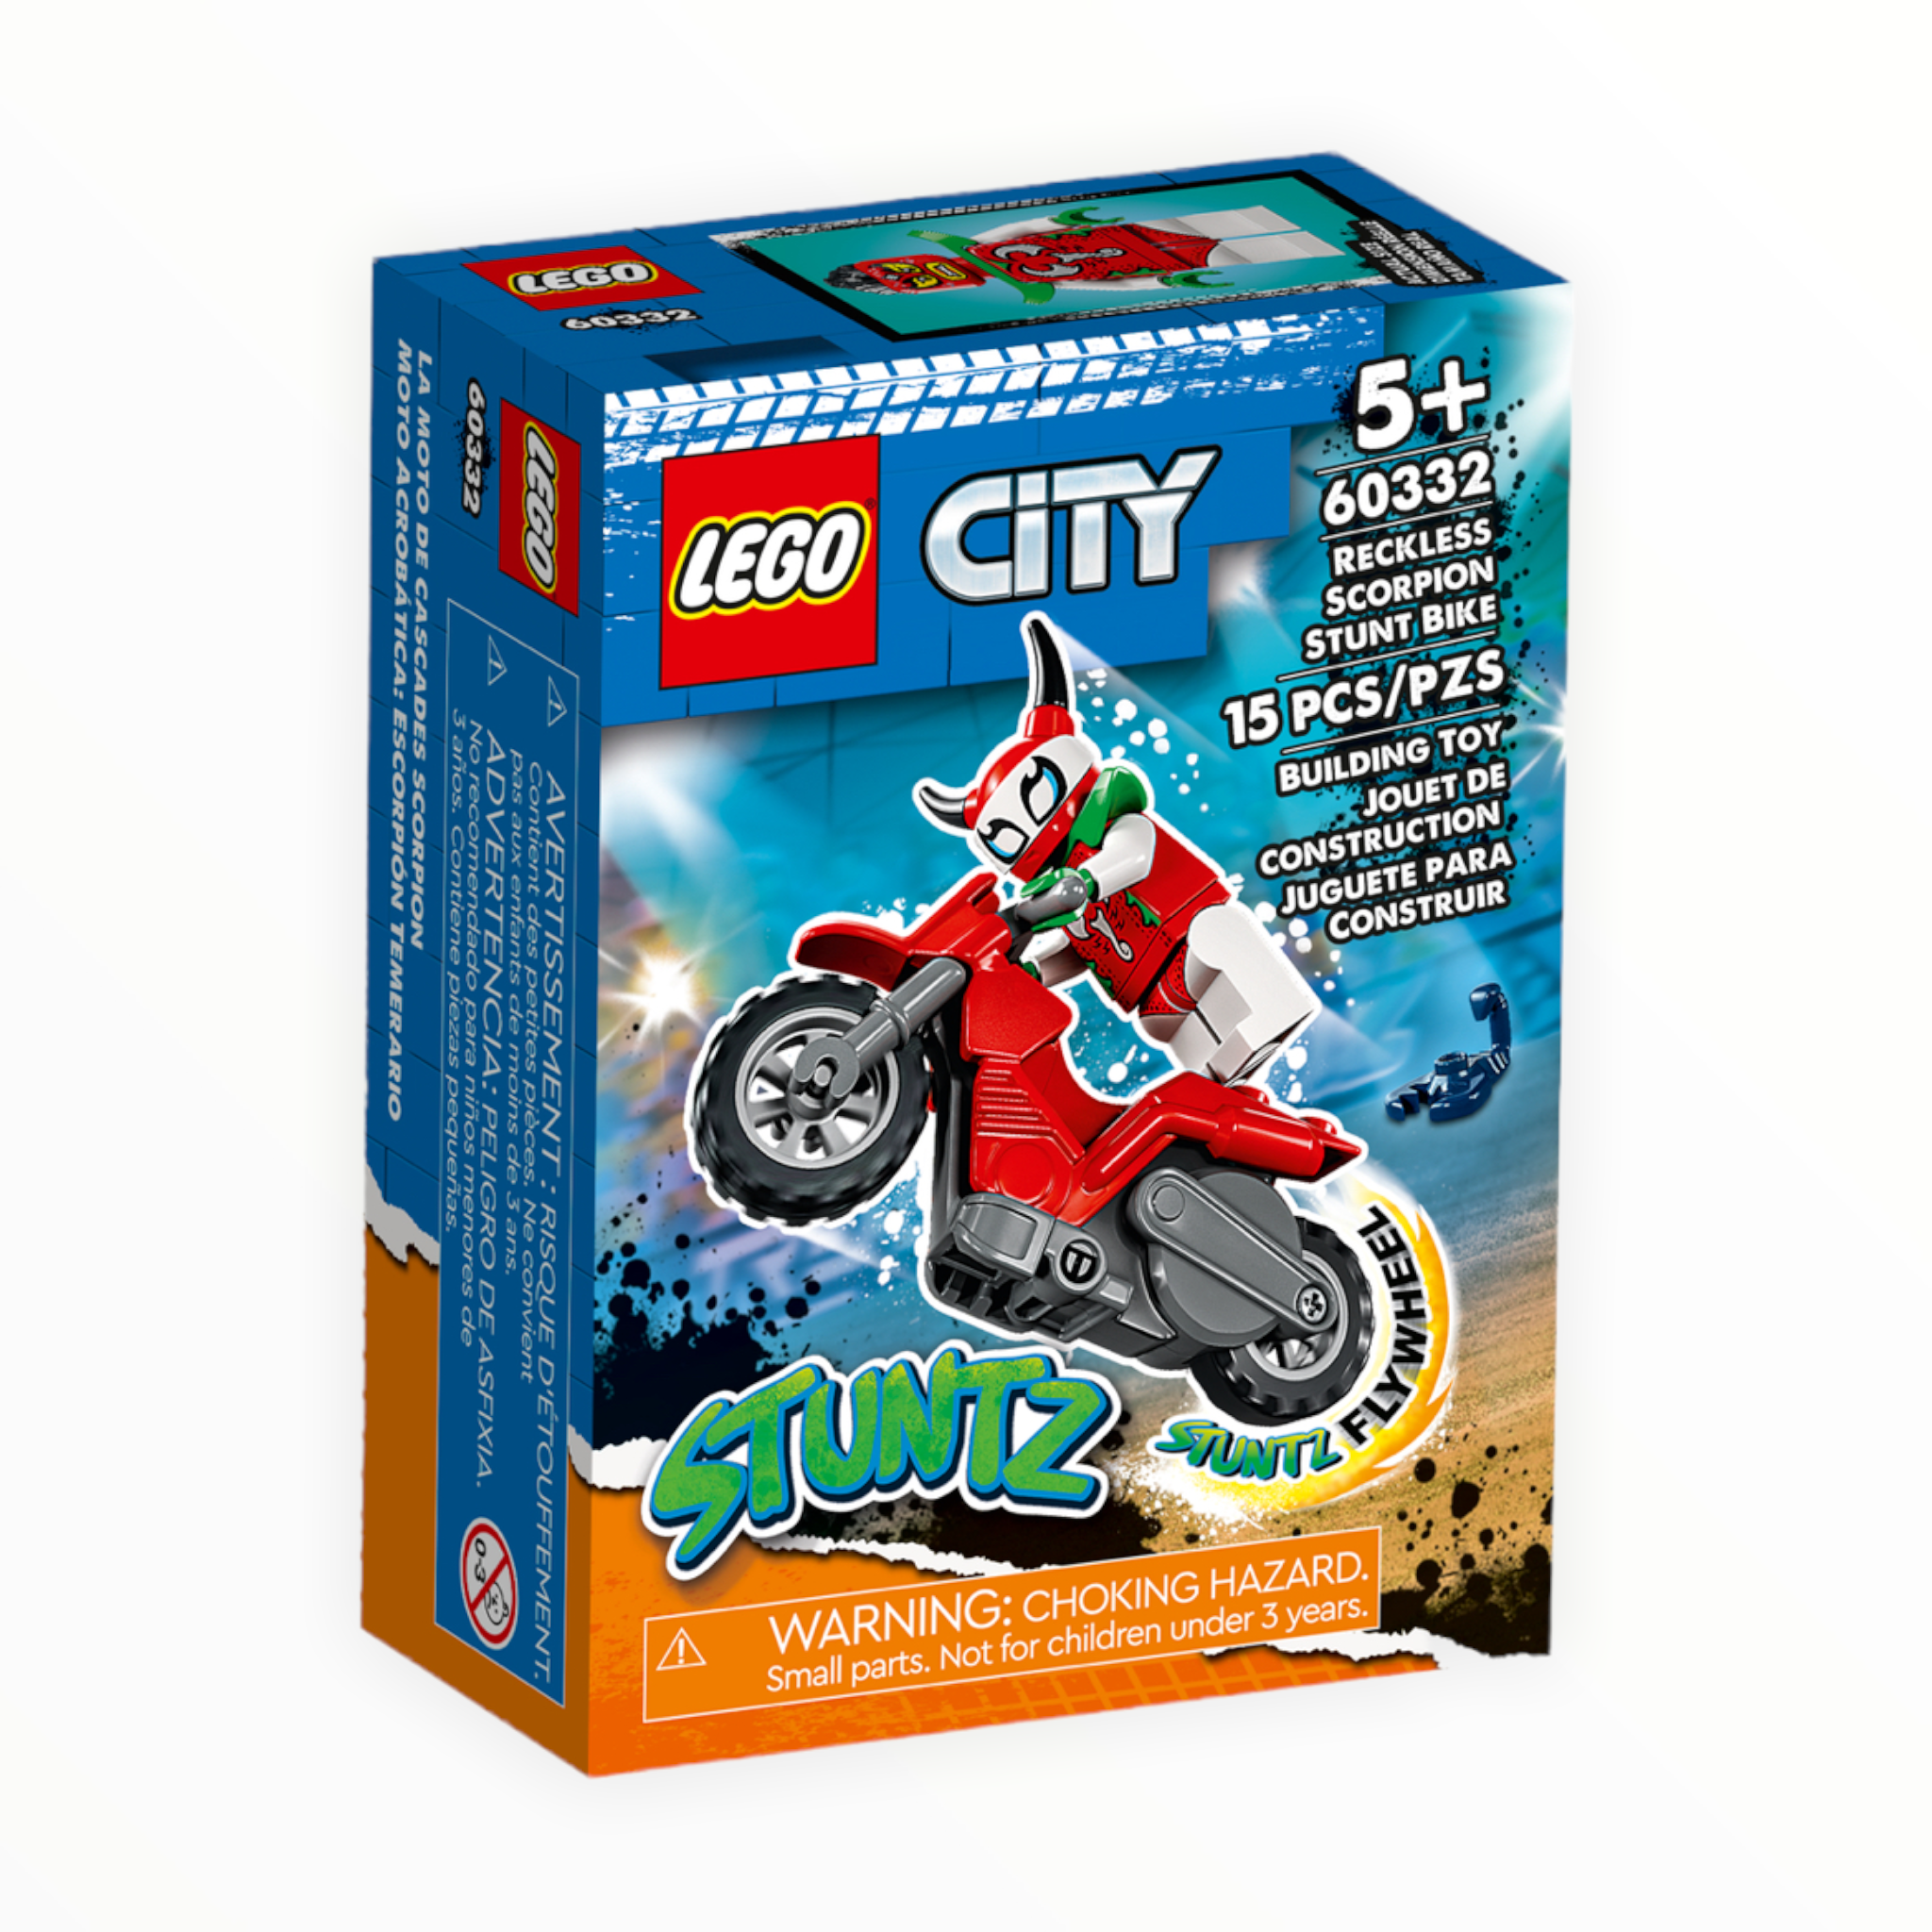 60332 City Reckless Scorpion Stunt Bike